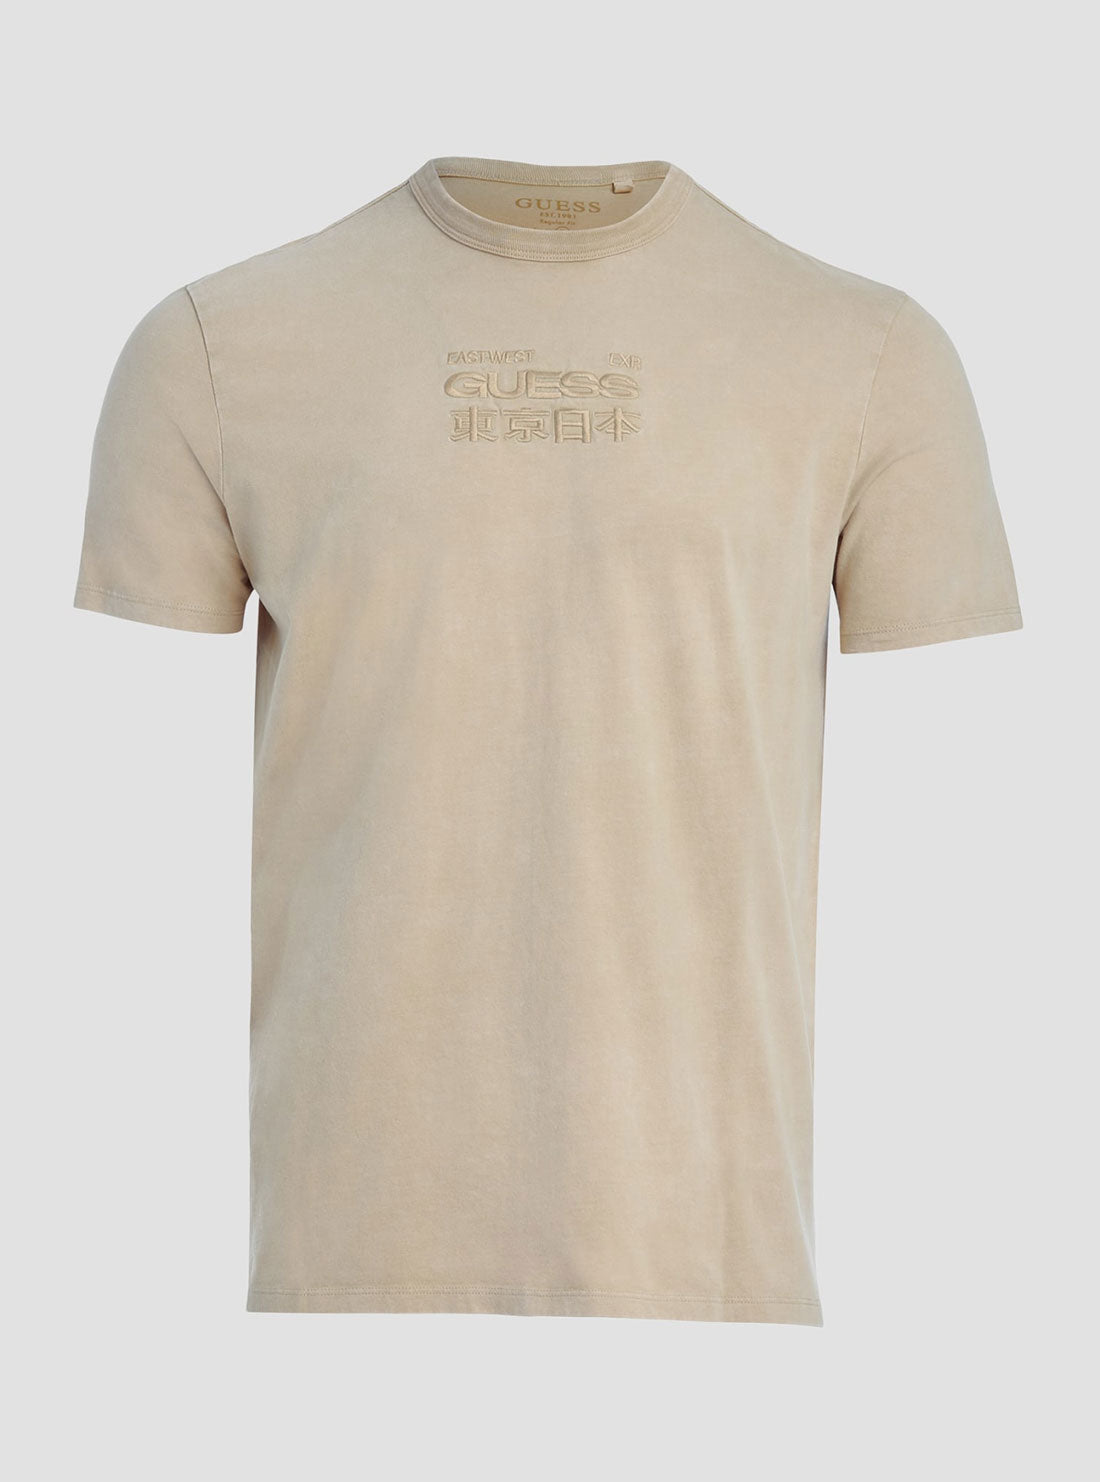 GUESS Men's Grey Multi 1981 Expedition T-Shirt M3GI62KA260 Ghost View